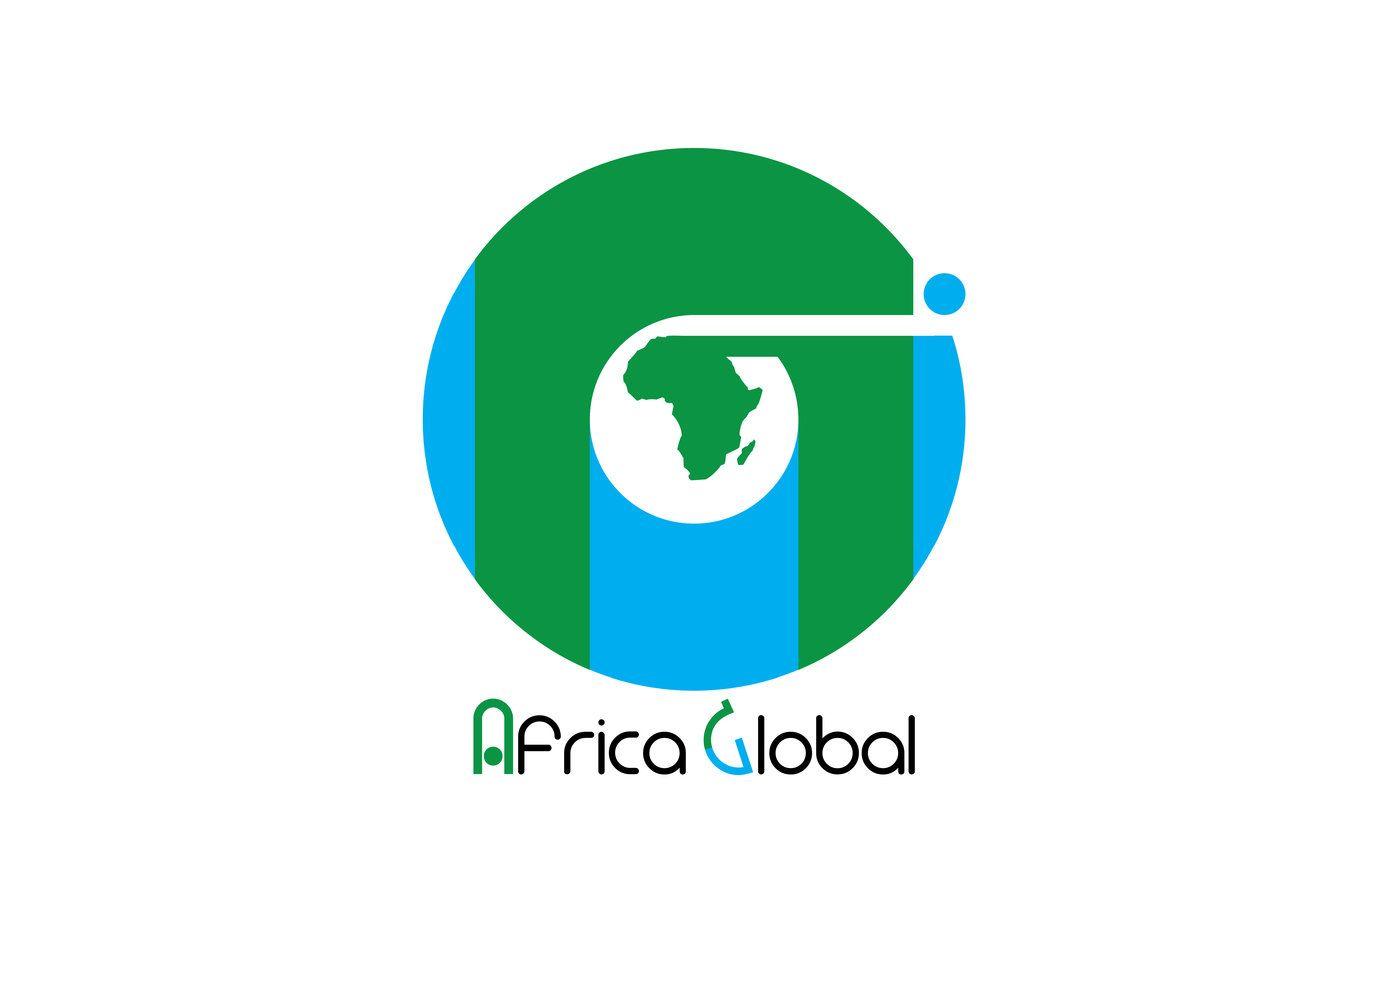 Africa Global Logo - Africa Global Logo Design by Ping-Yi (Benny) Lu at Coroflot.com